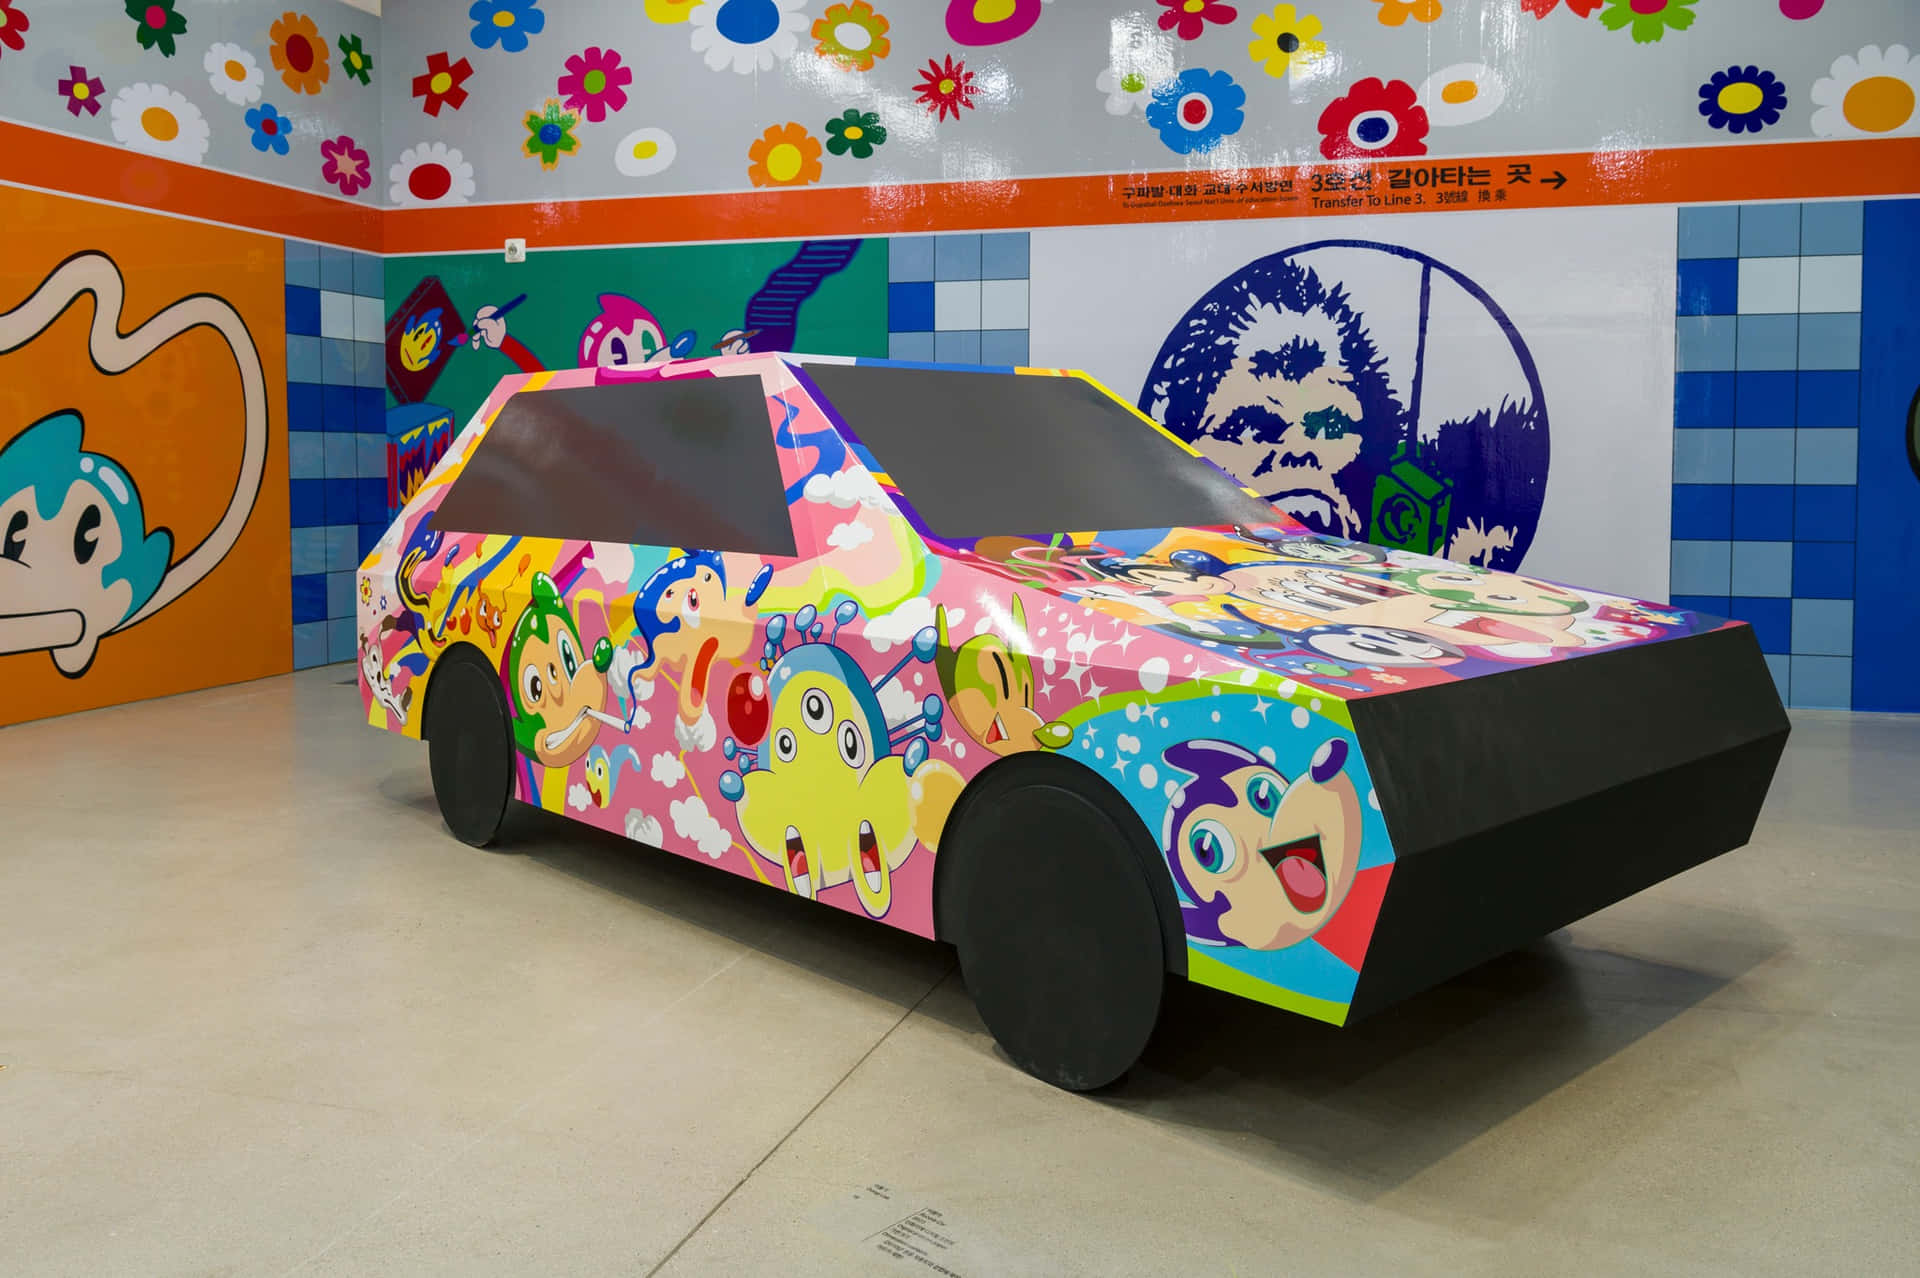 Pop Art Exhibit Car Seoul Museum Wallpaper